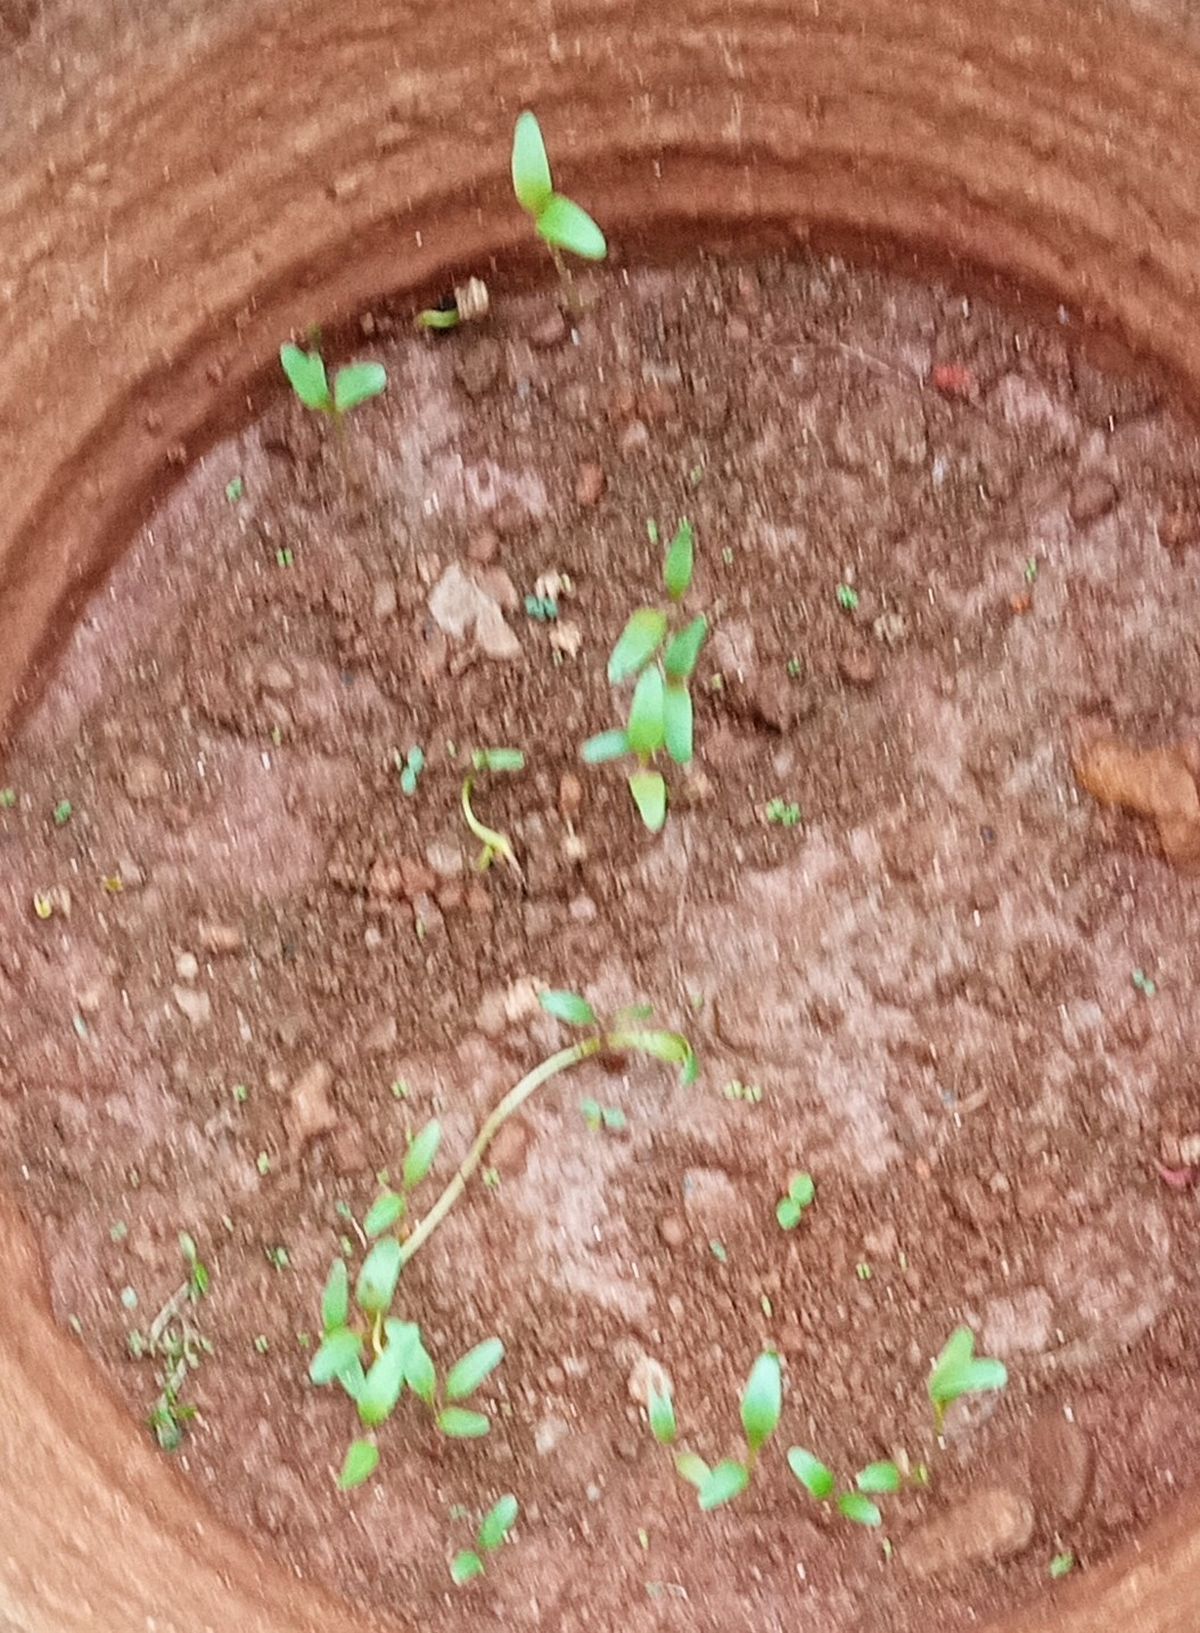 Spinach seeds germinating (Spinacia oleracea)